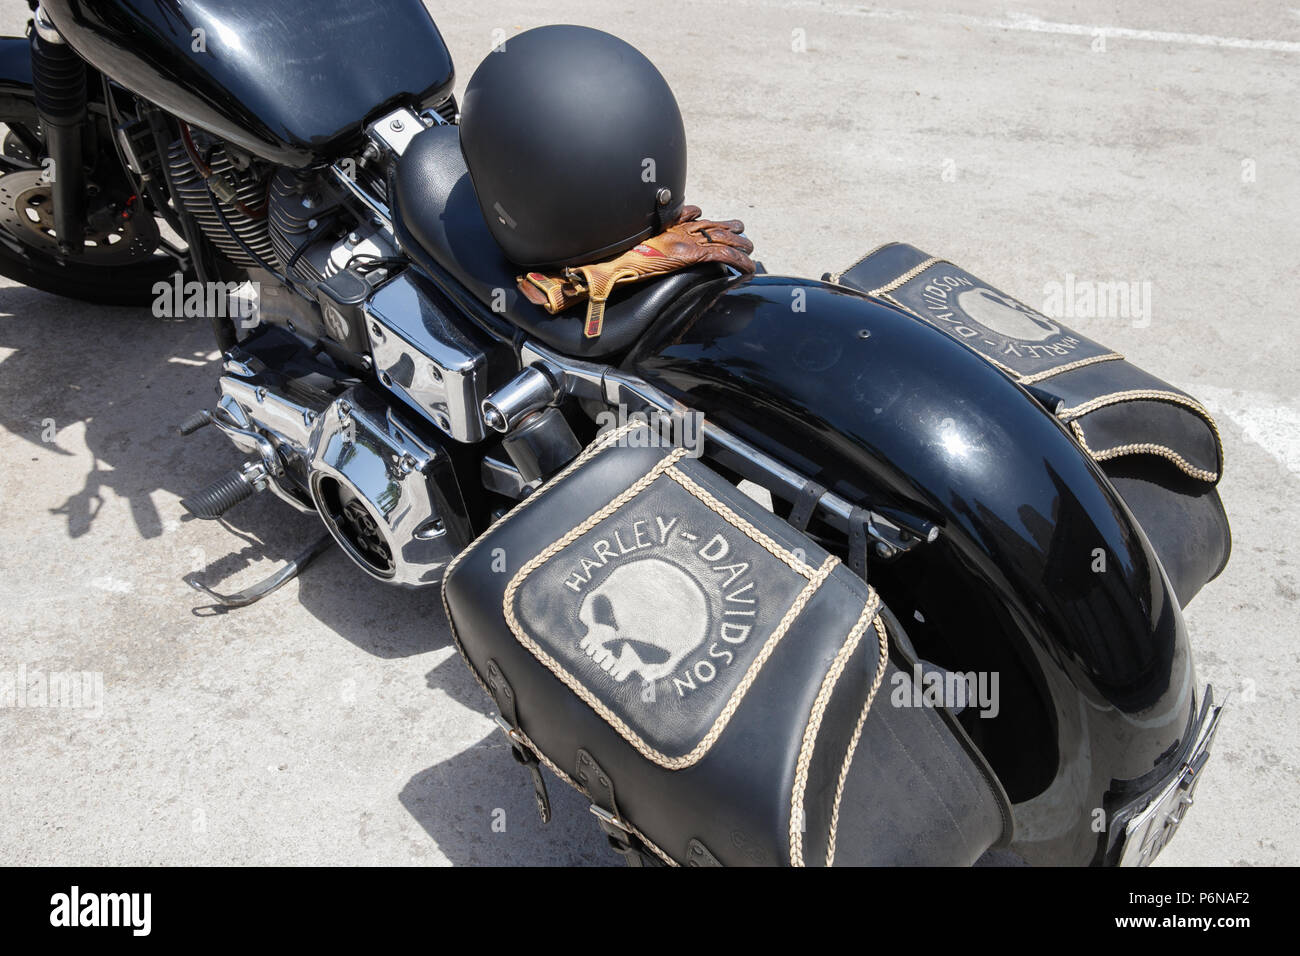 Motorbike Helmet on Harley Davidson Stock Photo - Alamy